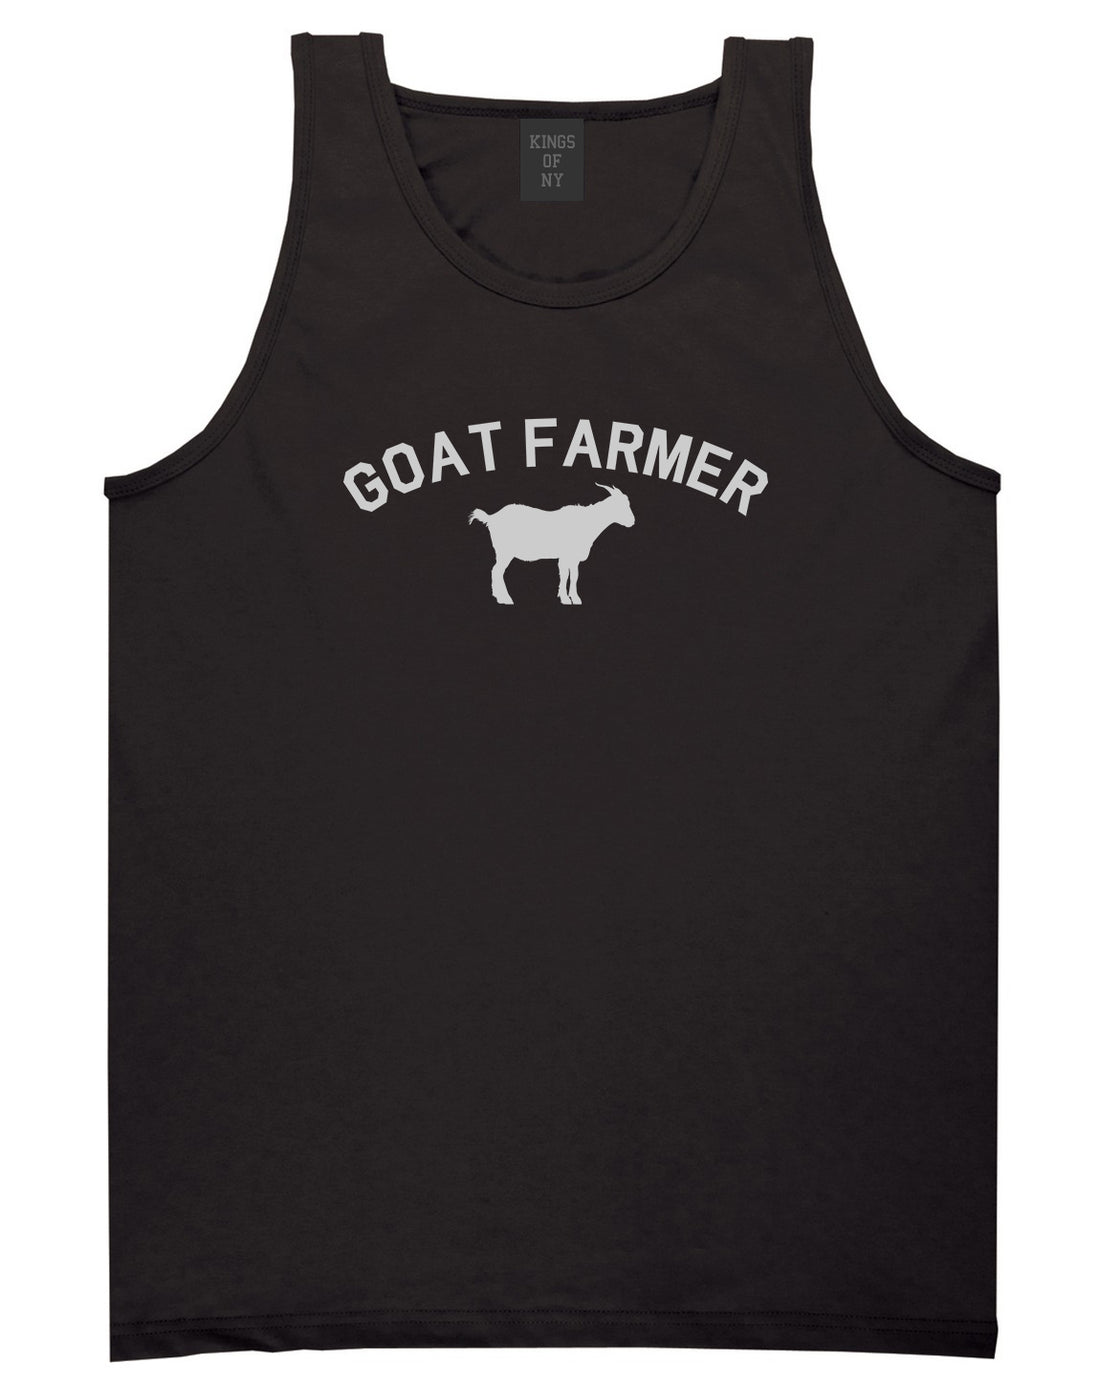 Goat Farmer Mens Black Tank Top Shirt by KINGS OF NY